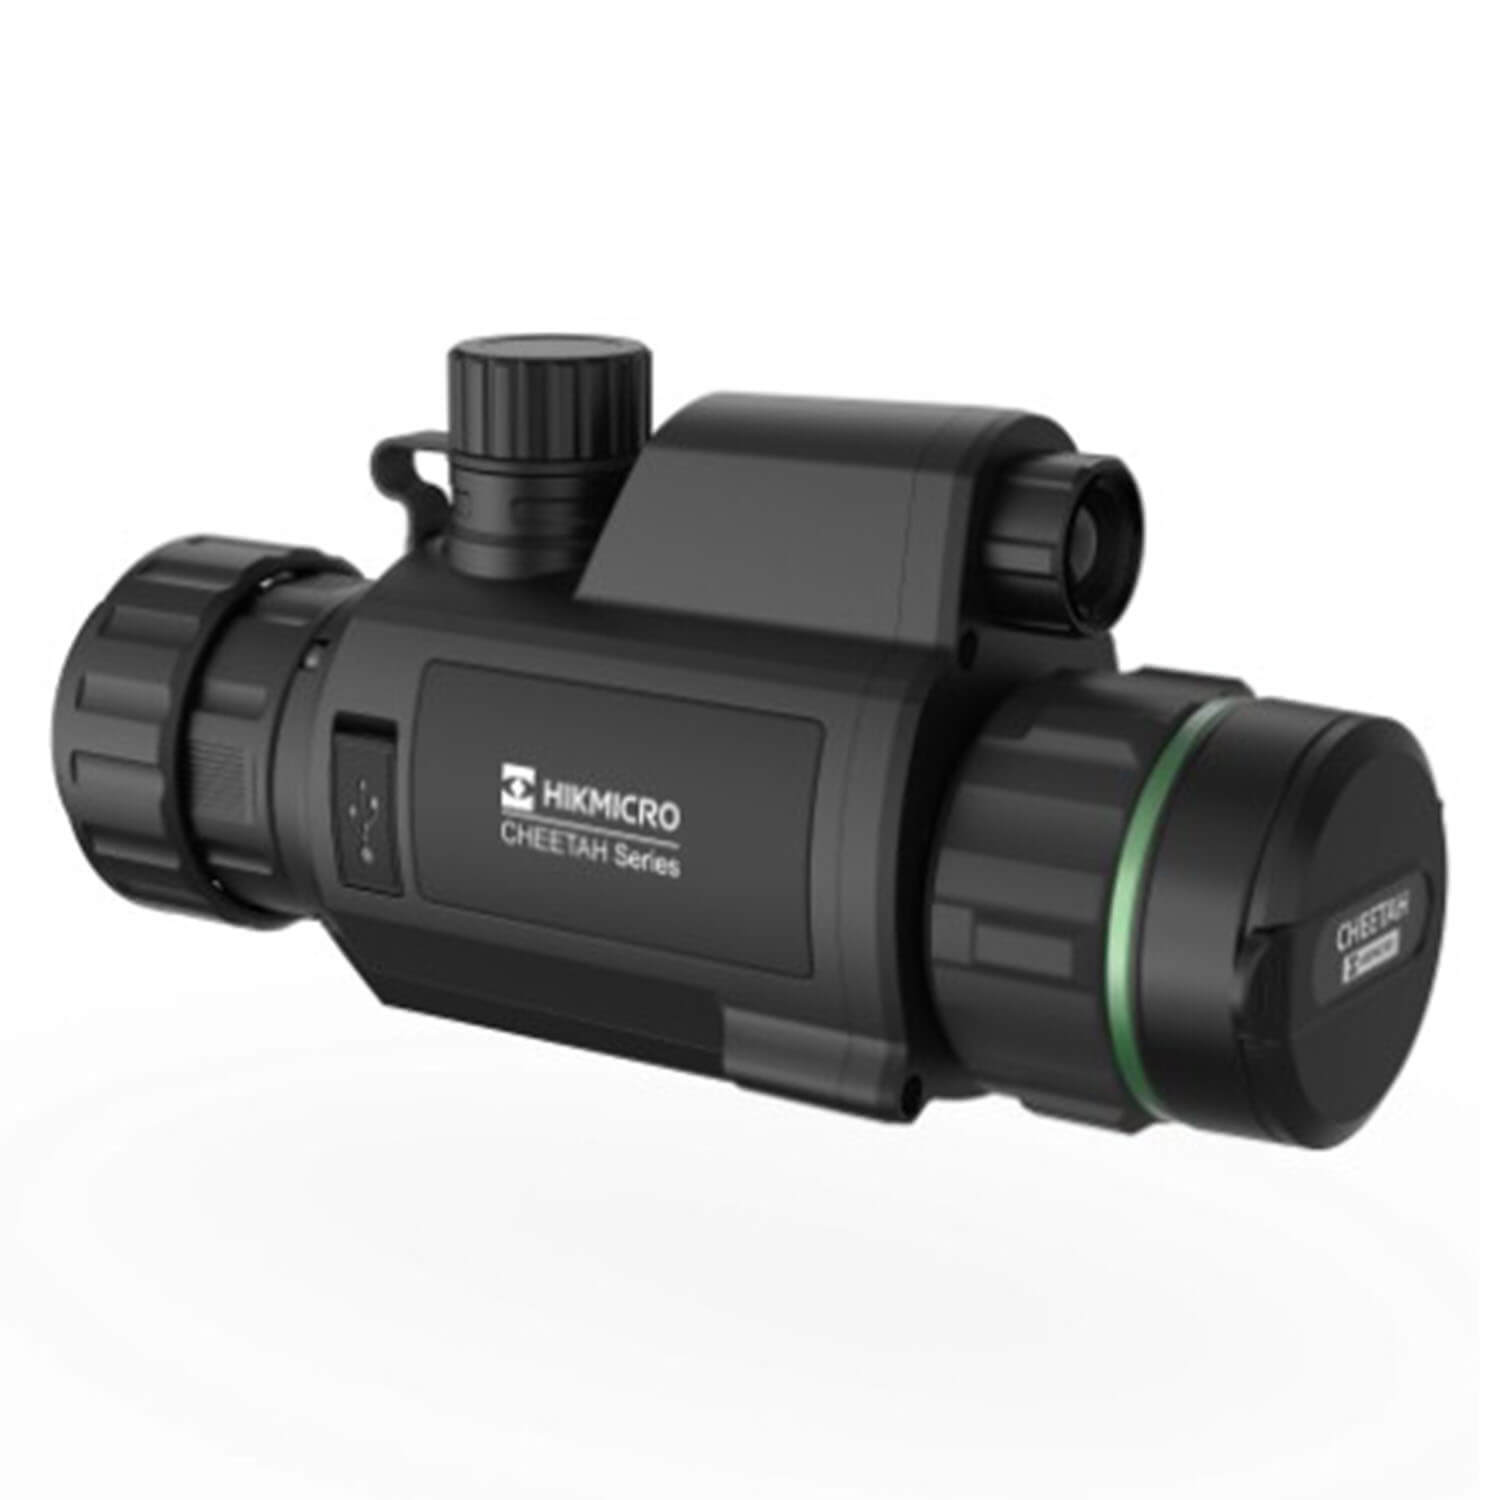 Hikmicro digital night vision device Cheetah 850nm